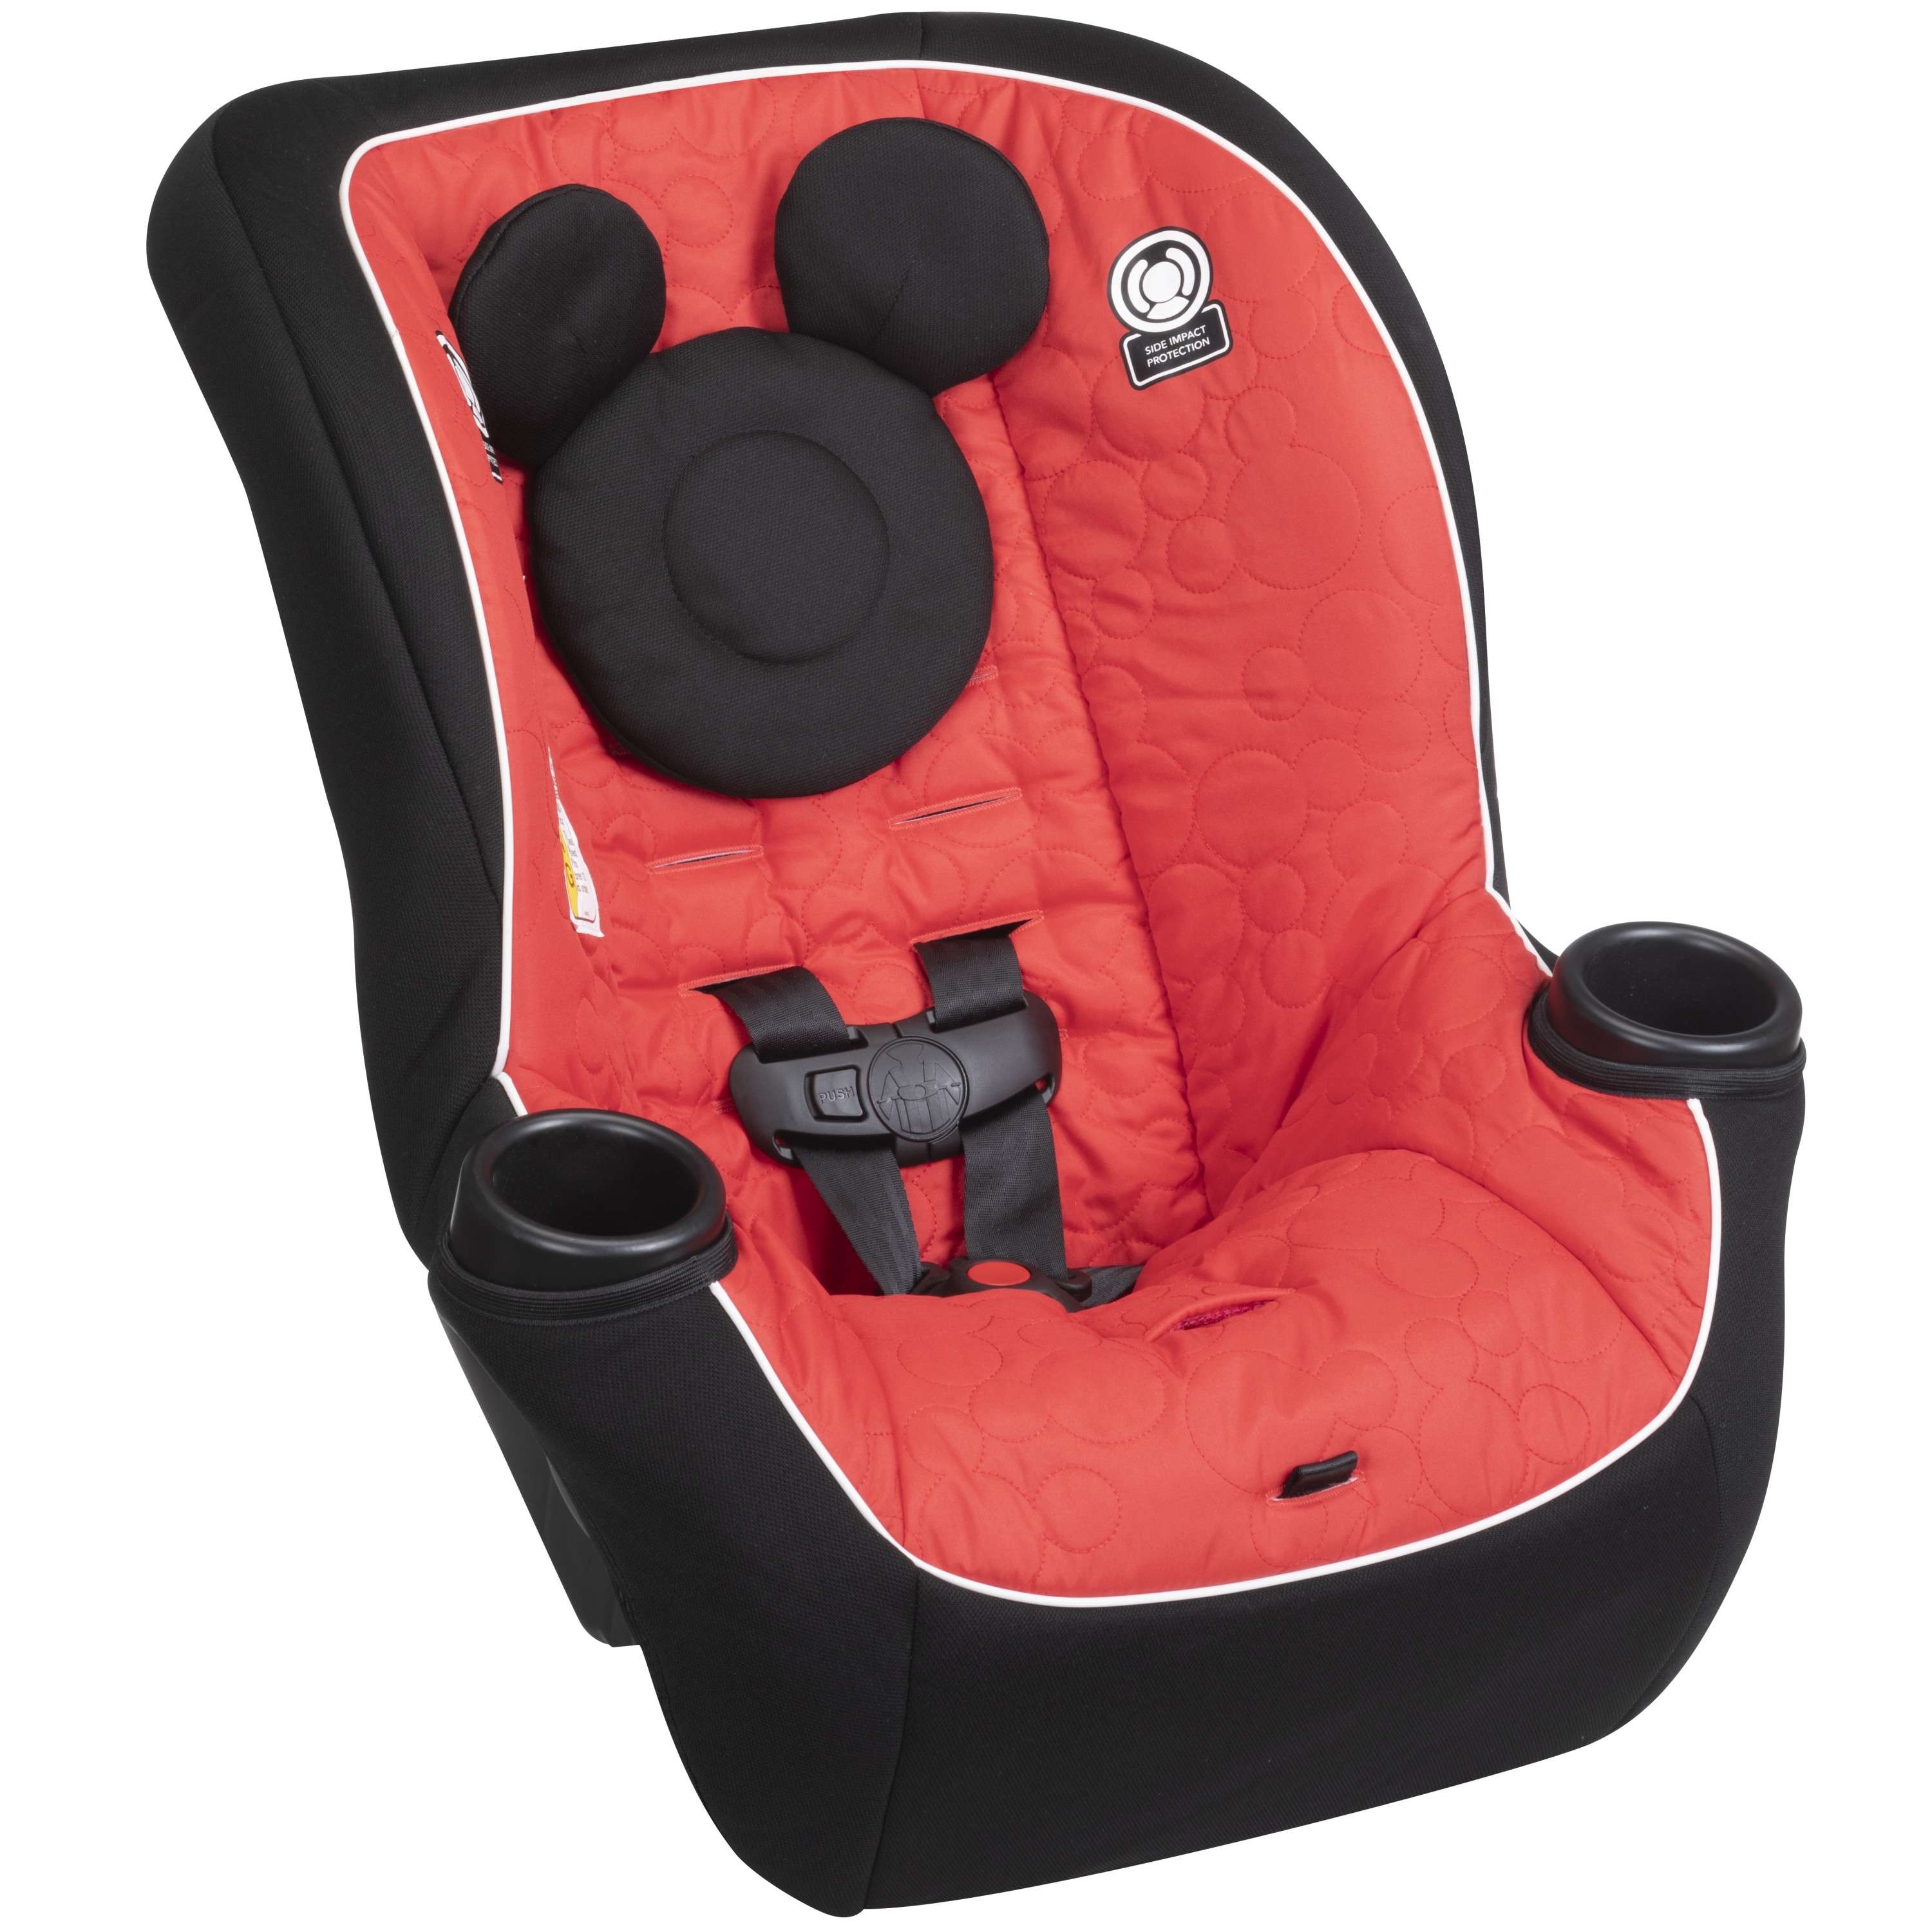 Disney Baby Onlook 2-in-1 Convertible Car Seat, Mouseketeer Mickey - image 5 of 9